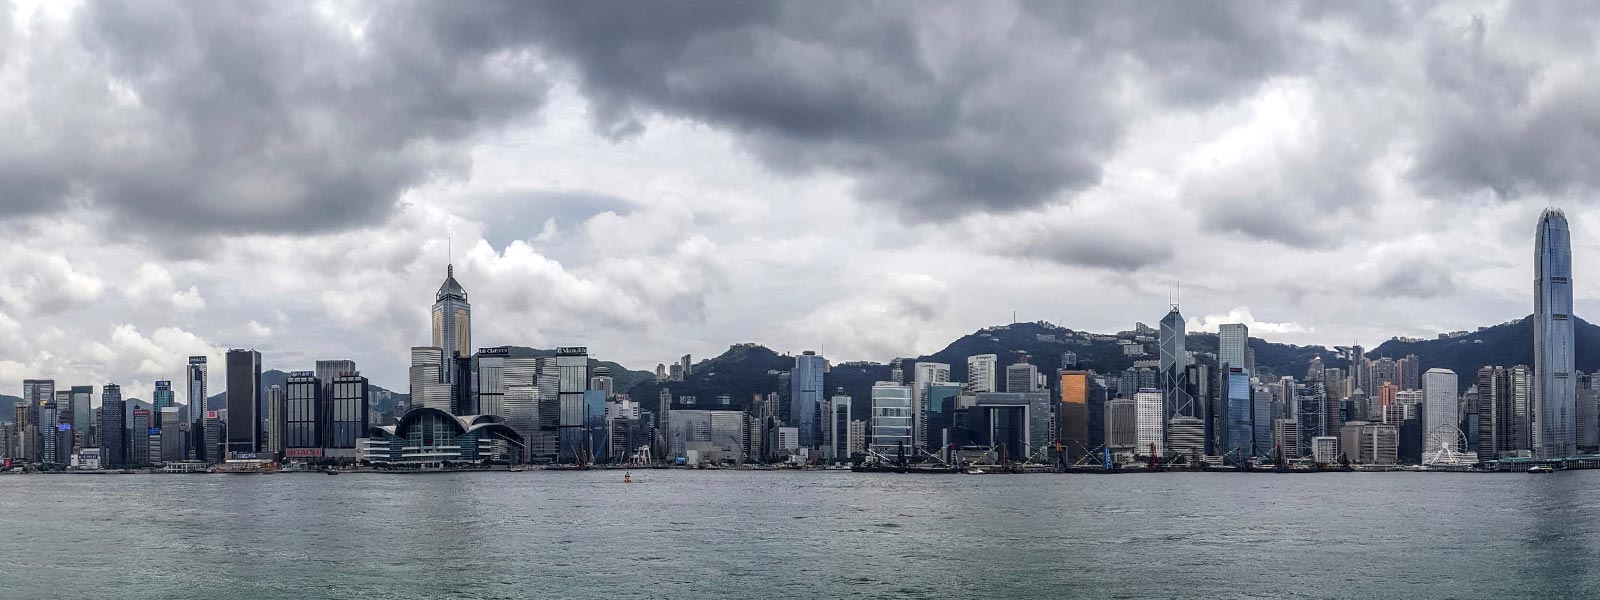 The City of Hong Kong Skyline